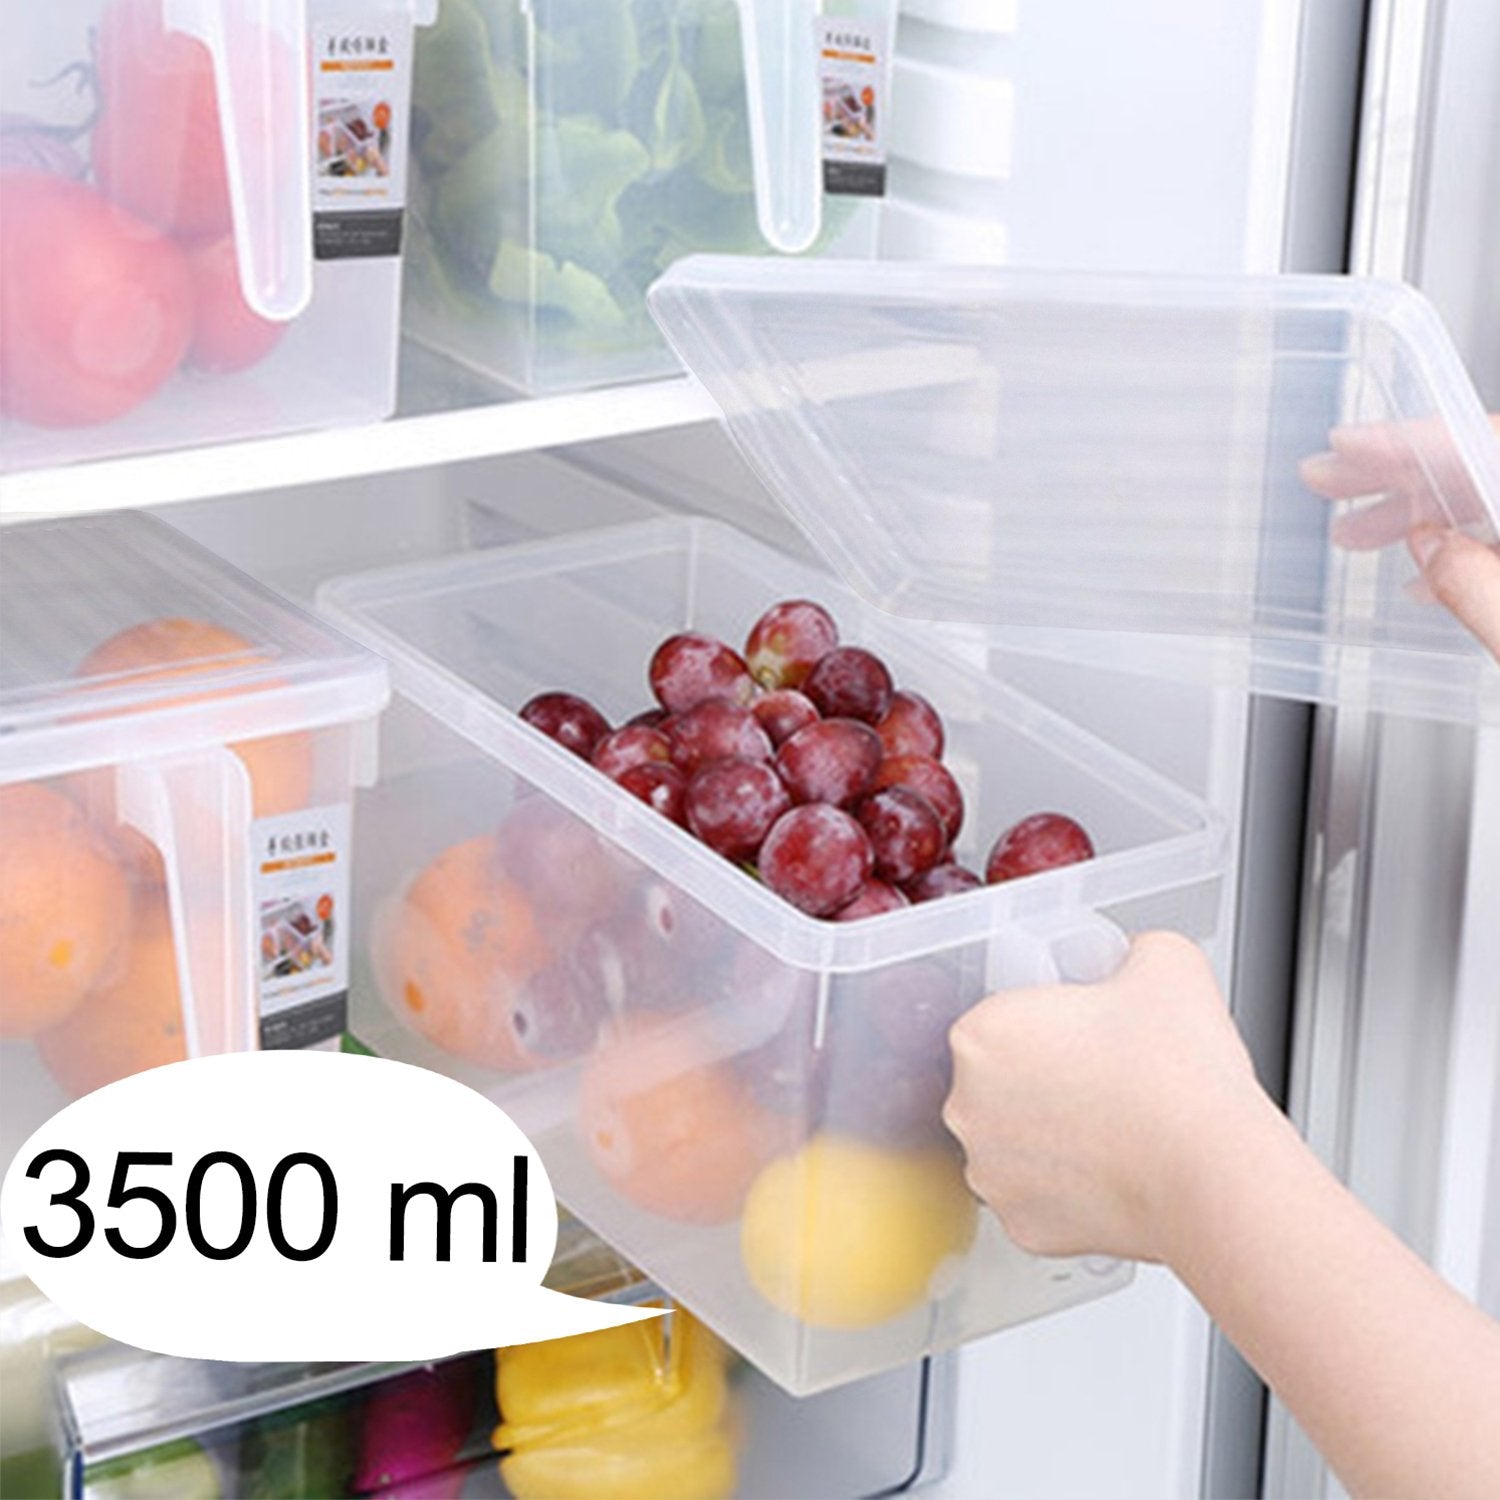 2519 Square Refrigerator Organizer Fresh-Keeping Box Case Kitchen Storage Box